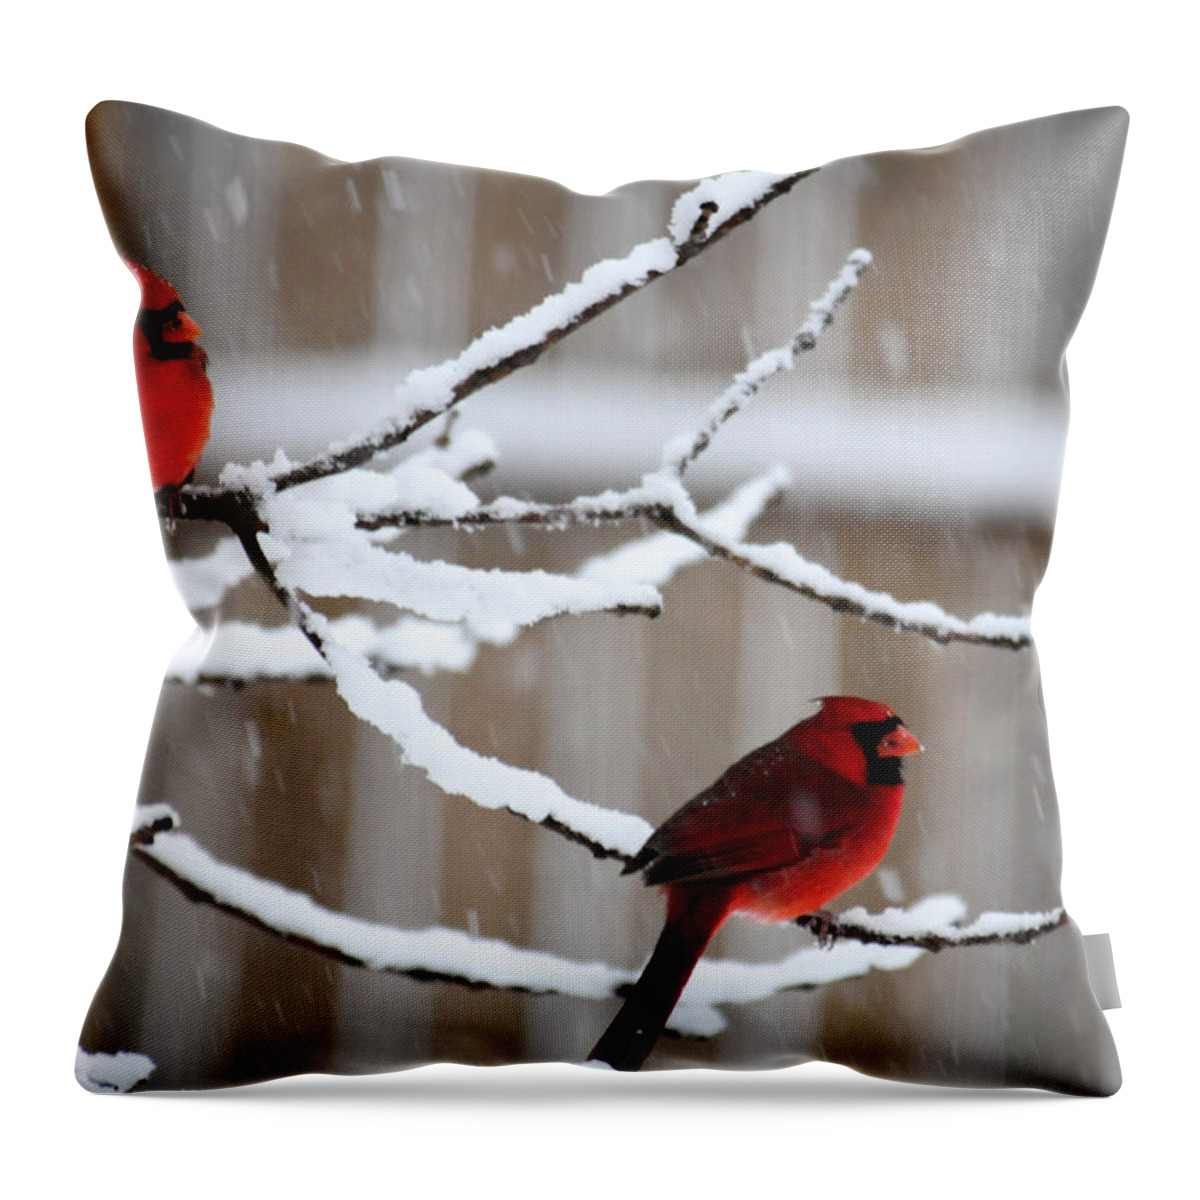 Birds Throw Pillow featuring the photograph Christmas Tree Ornaments by Wanda Brandon